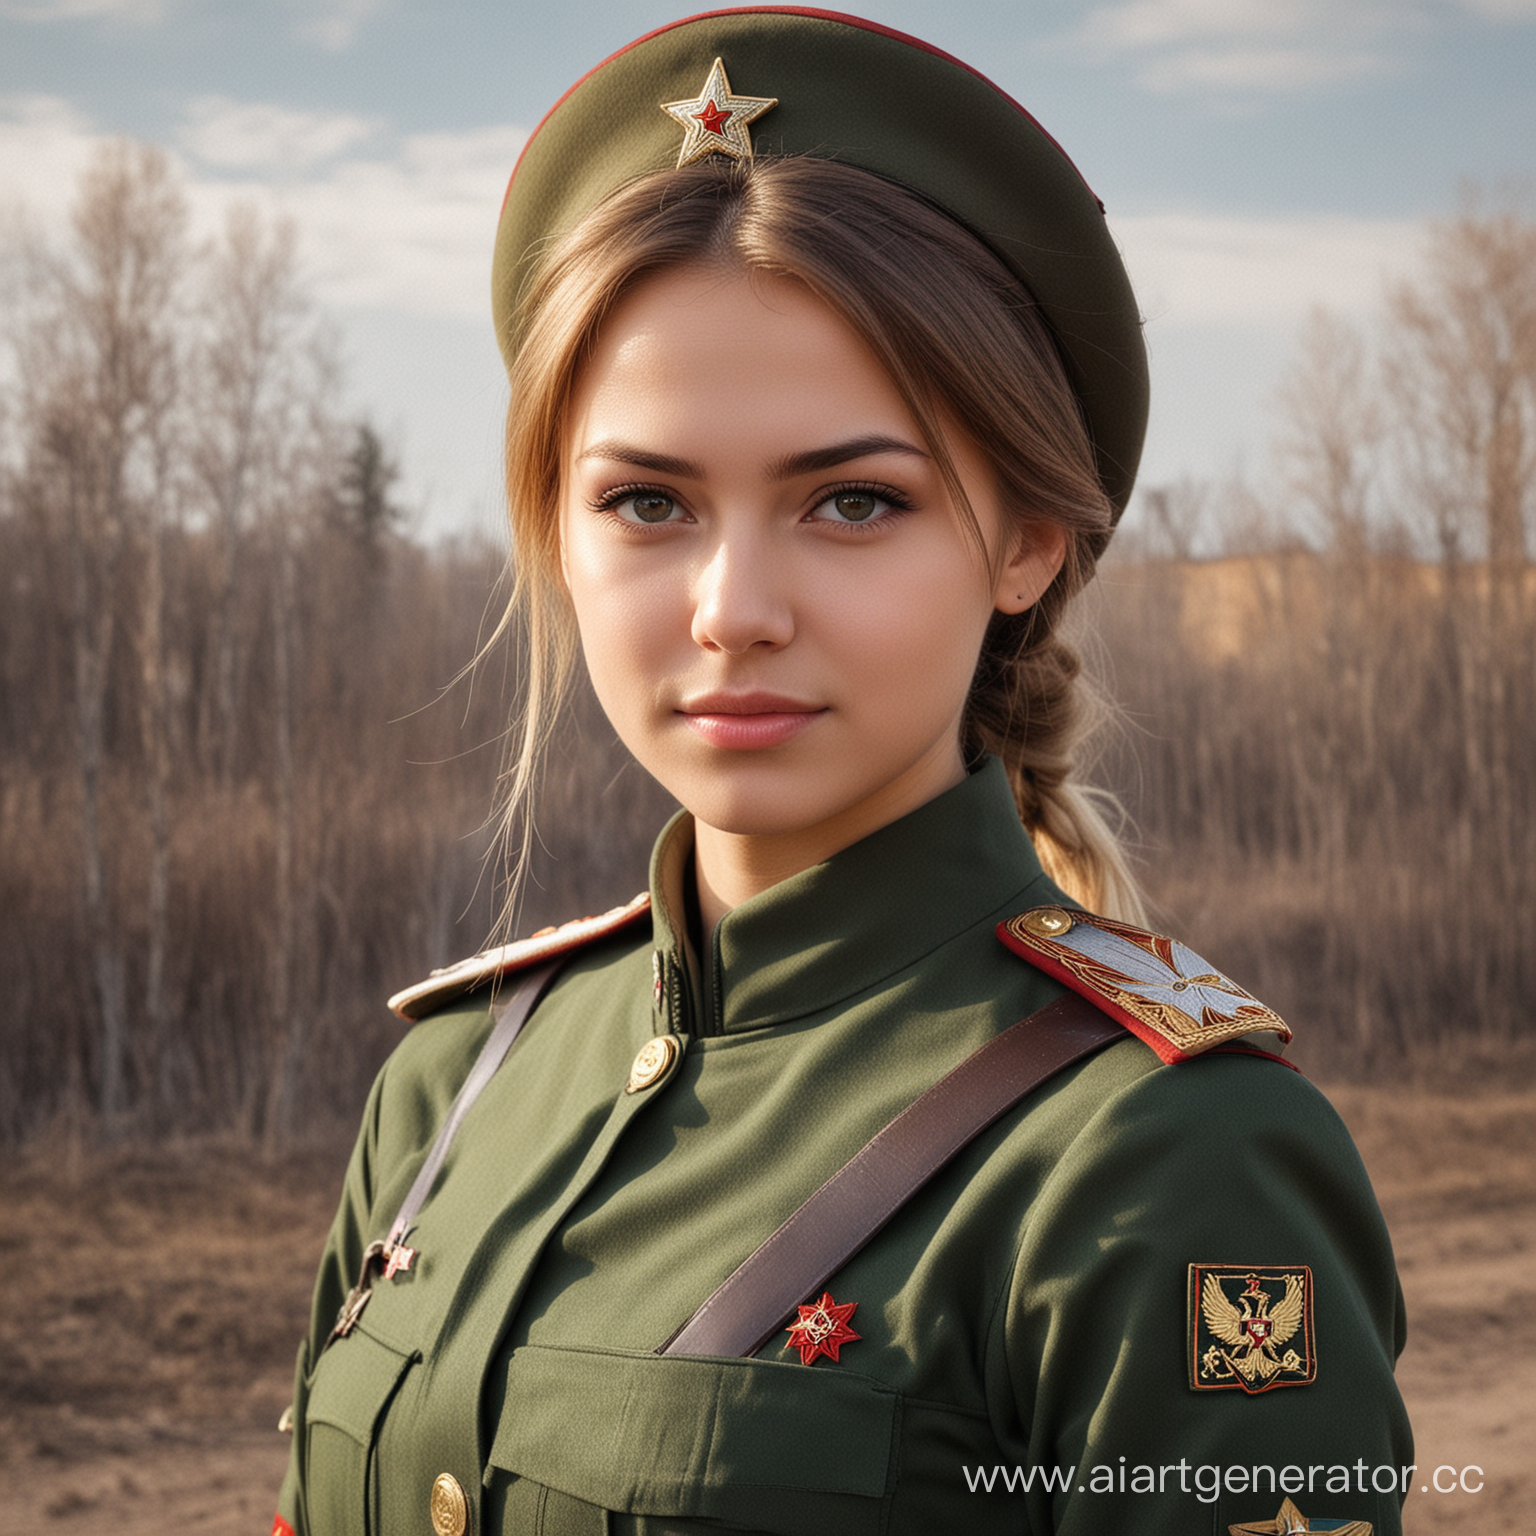 Russian military girl, cute